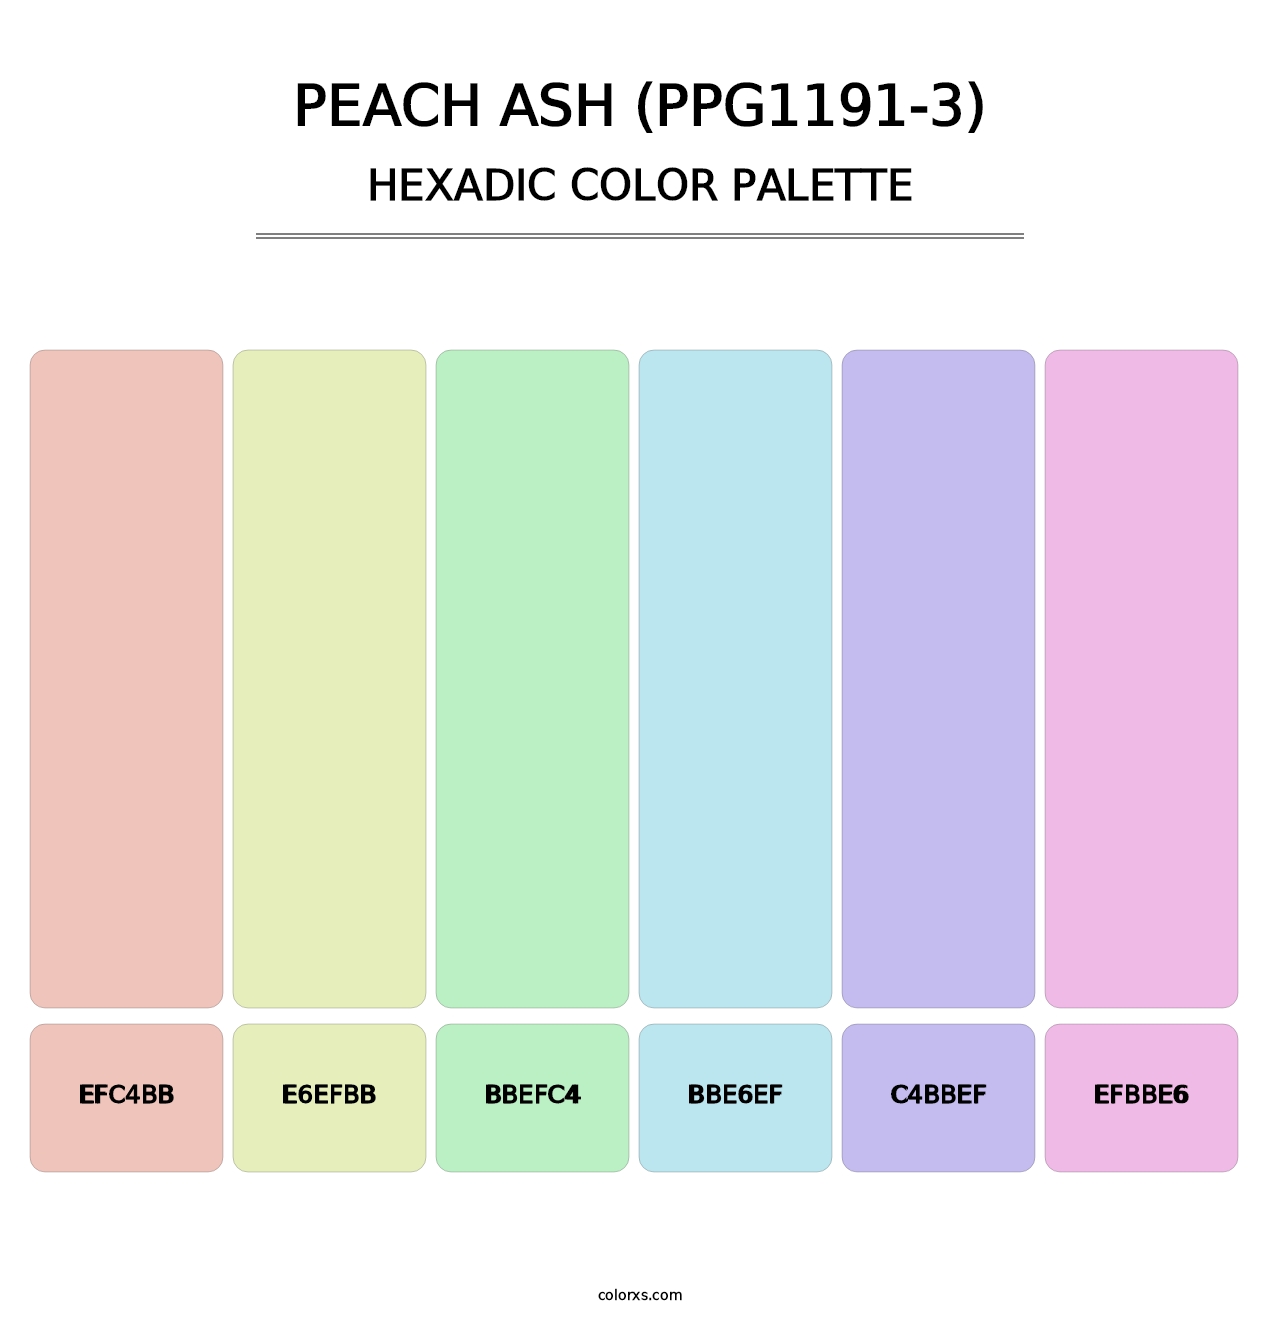 Peach Ash (PPG1191-3) - Hexadic Color Palette